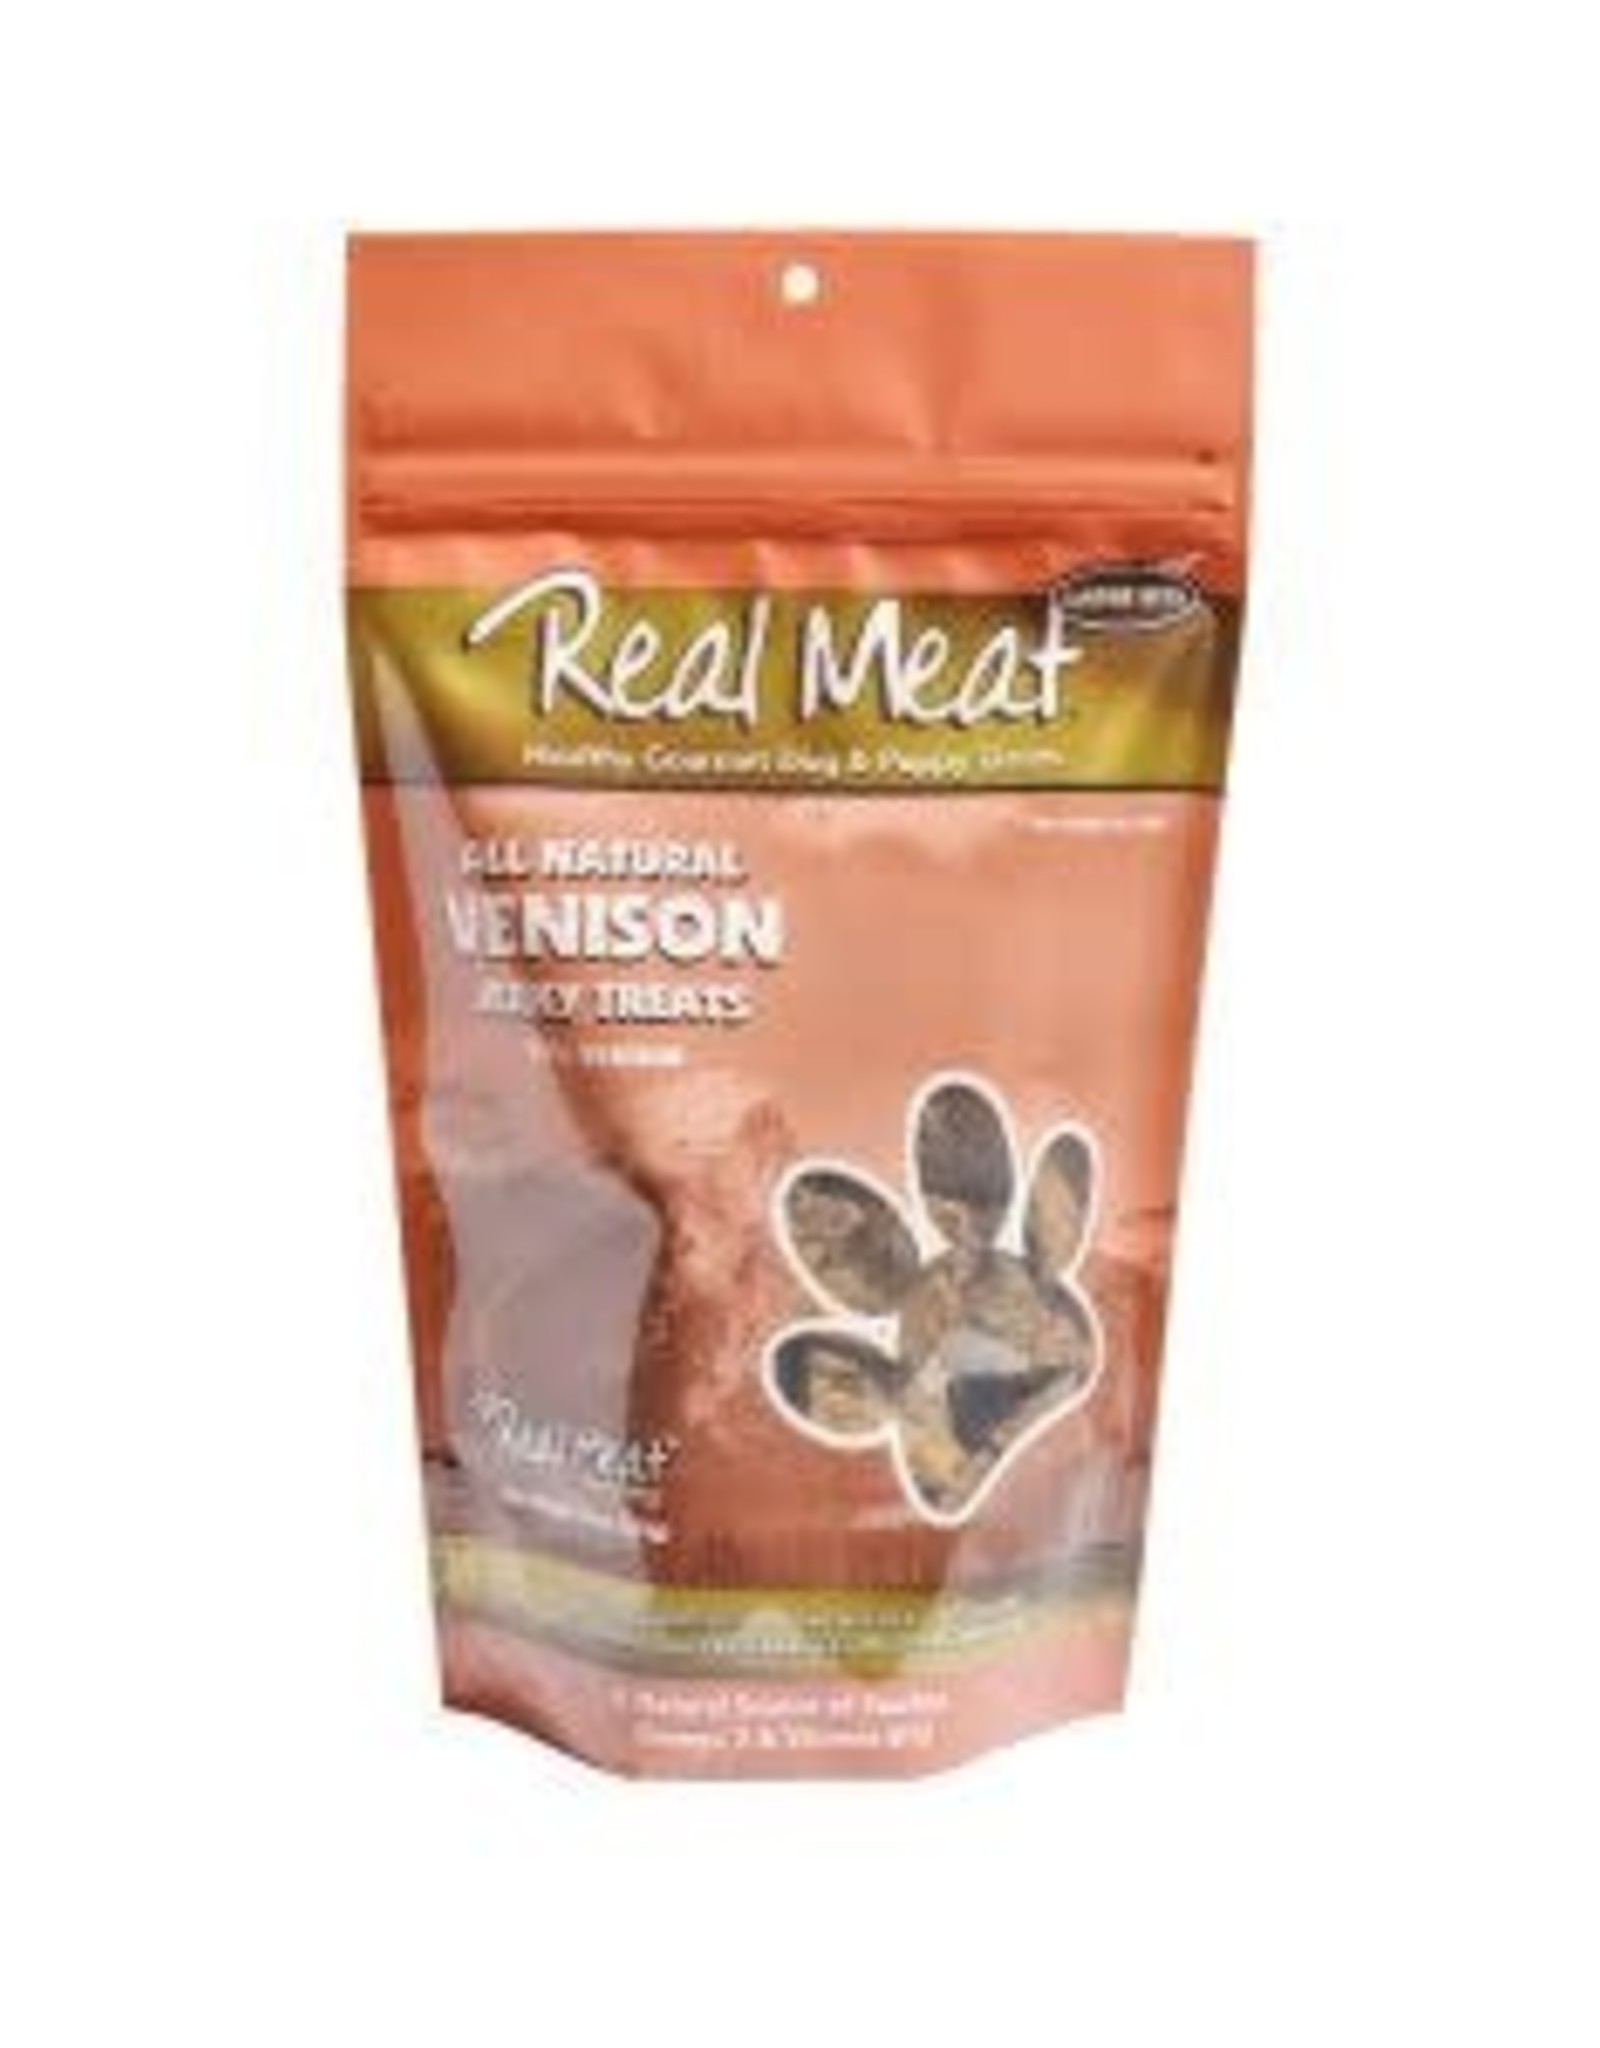 The Real Meat Company Real Meat Jerky Treats: Venison